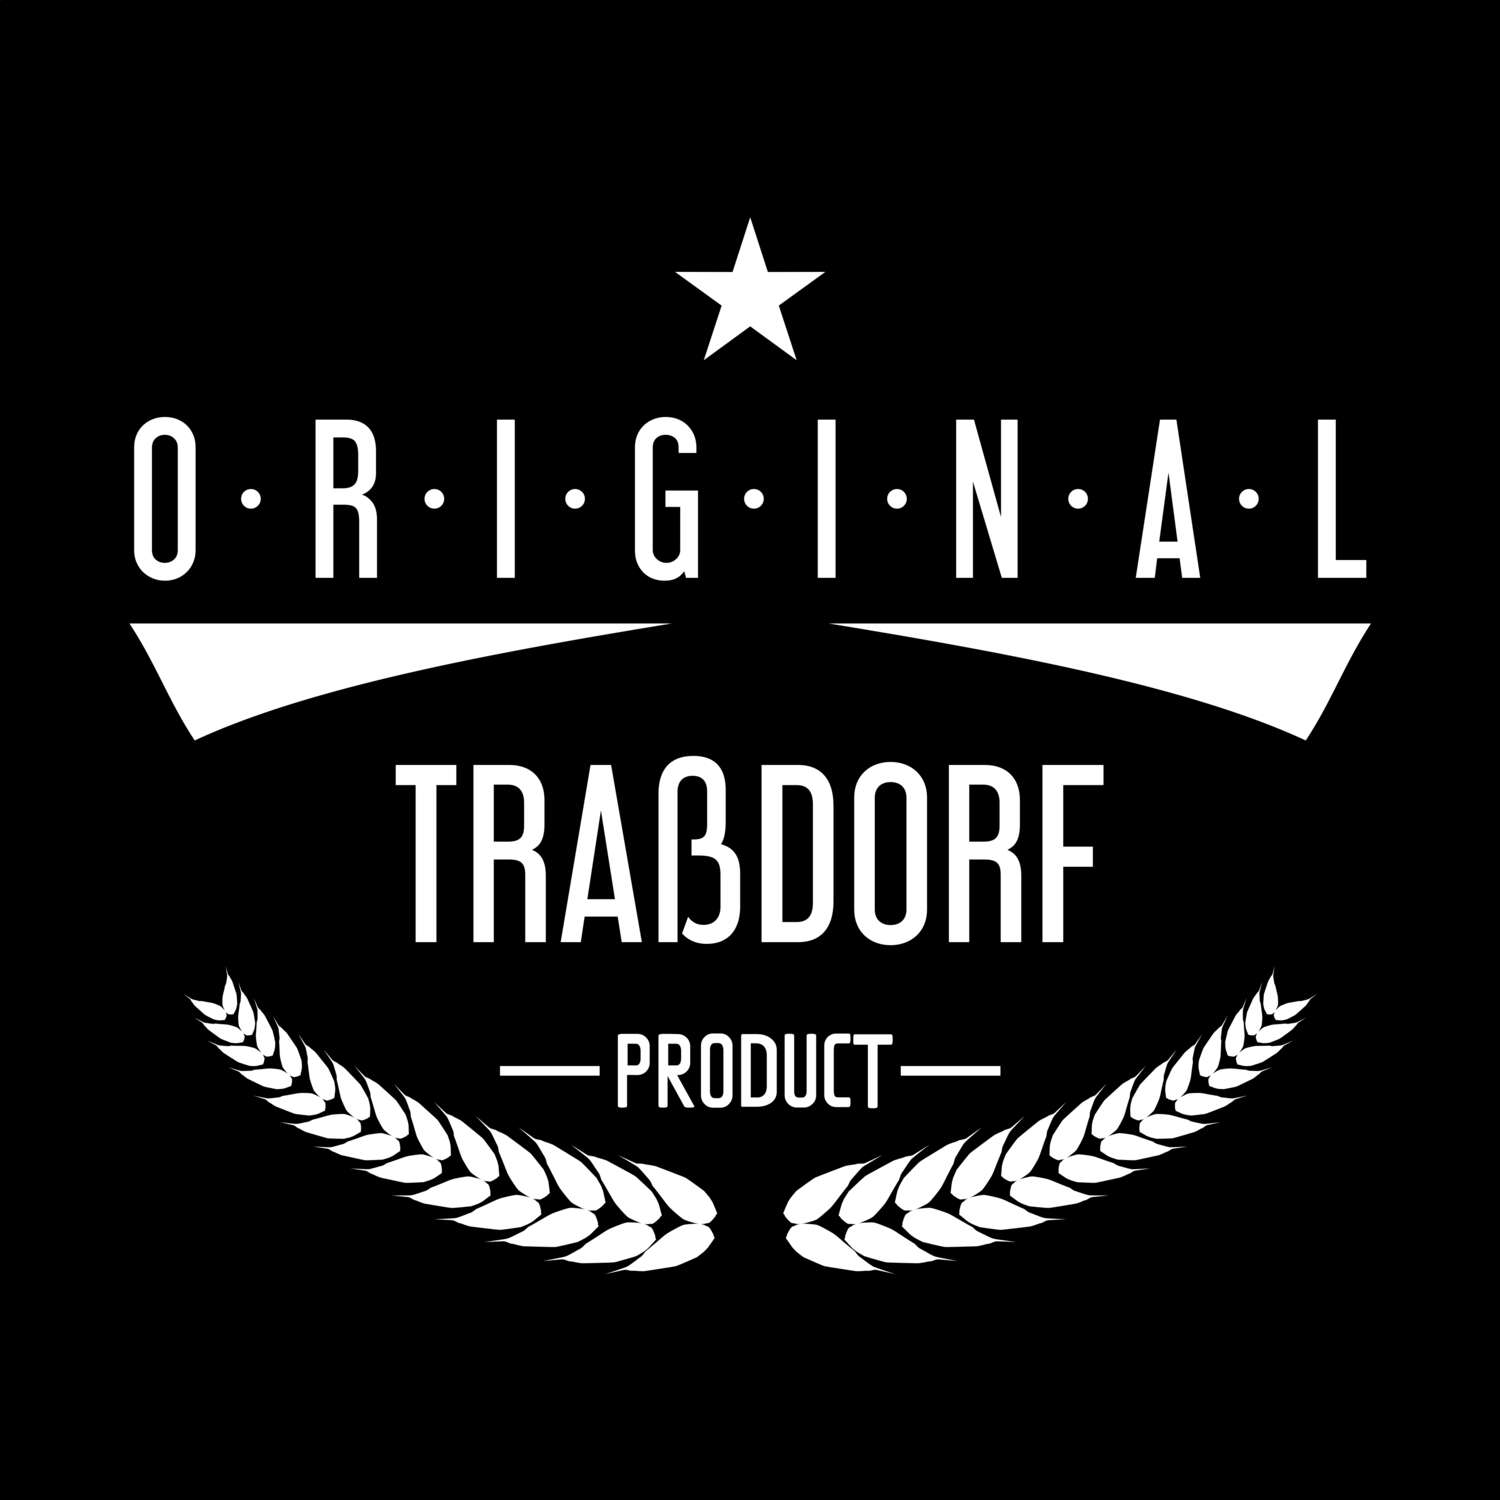 Traßdorf T-Shirt »Original Product«